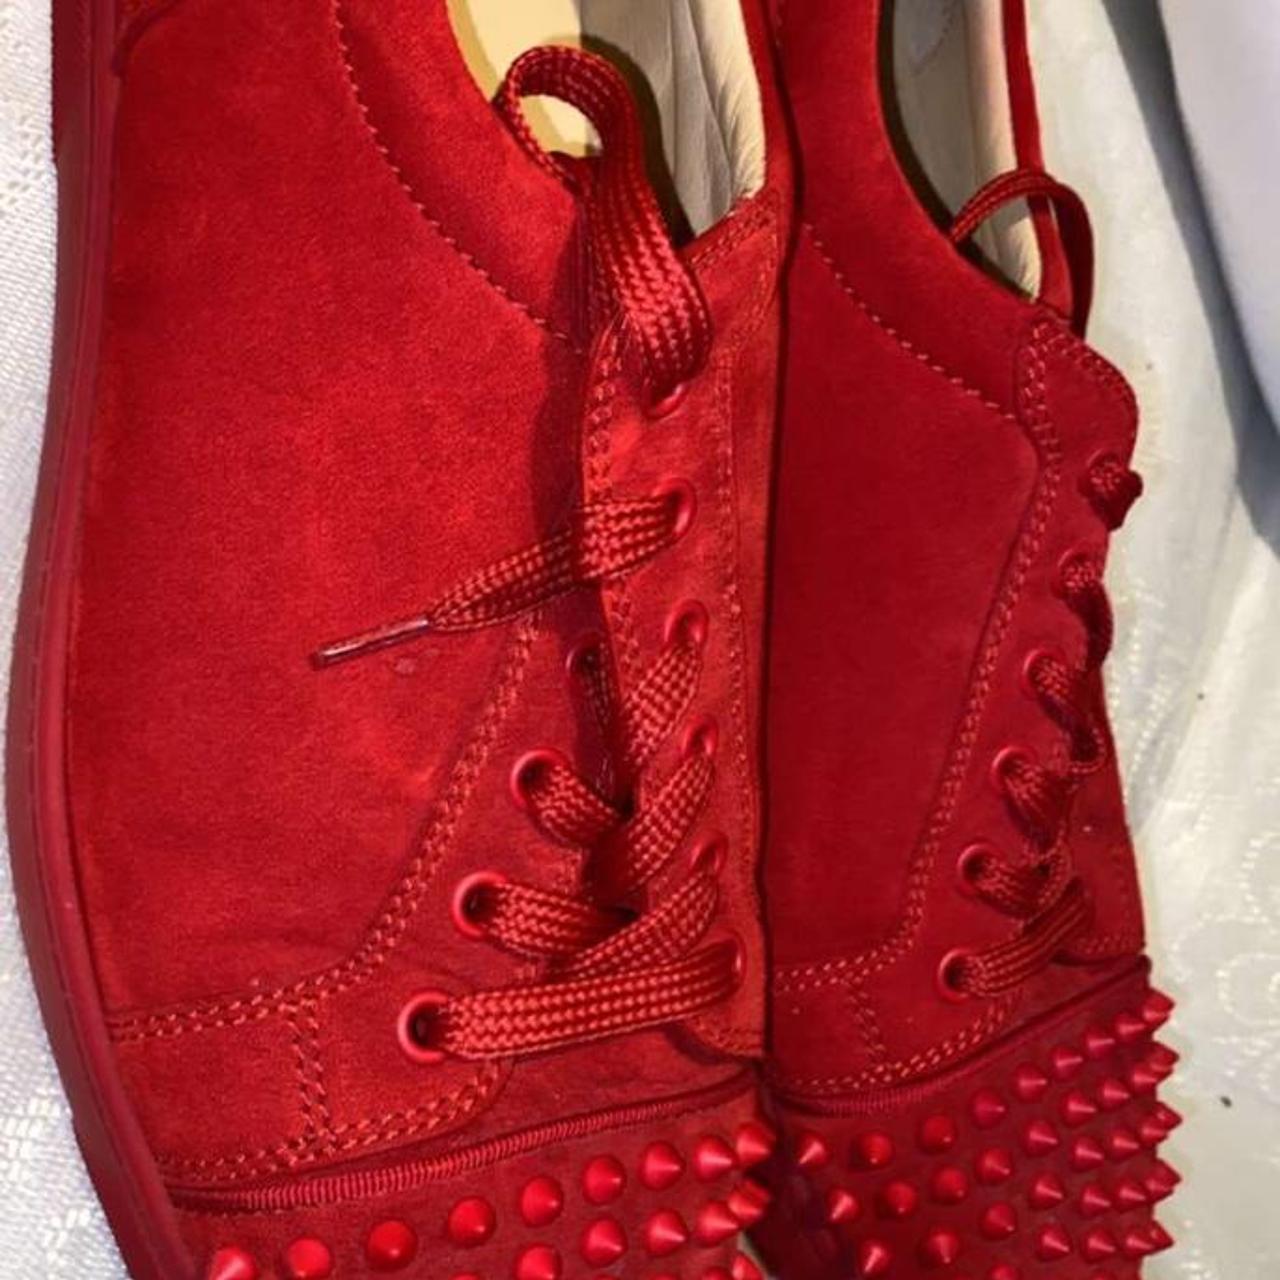 Brand new red bottom sneakers - Depop